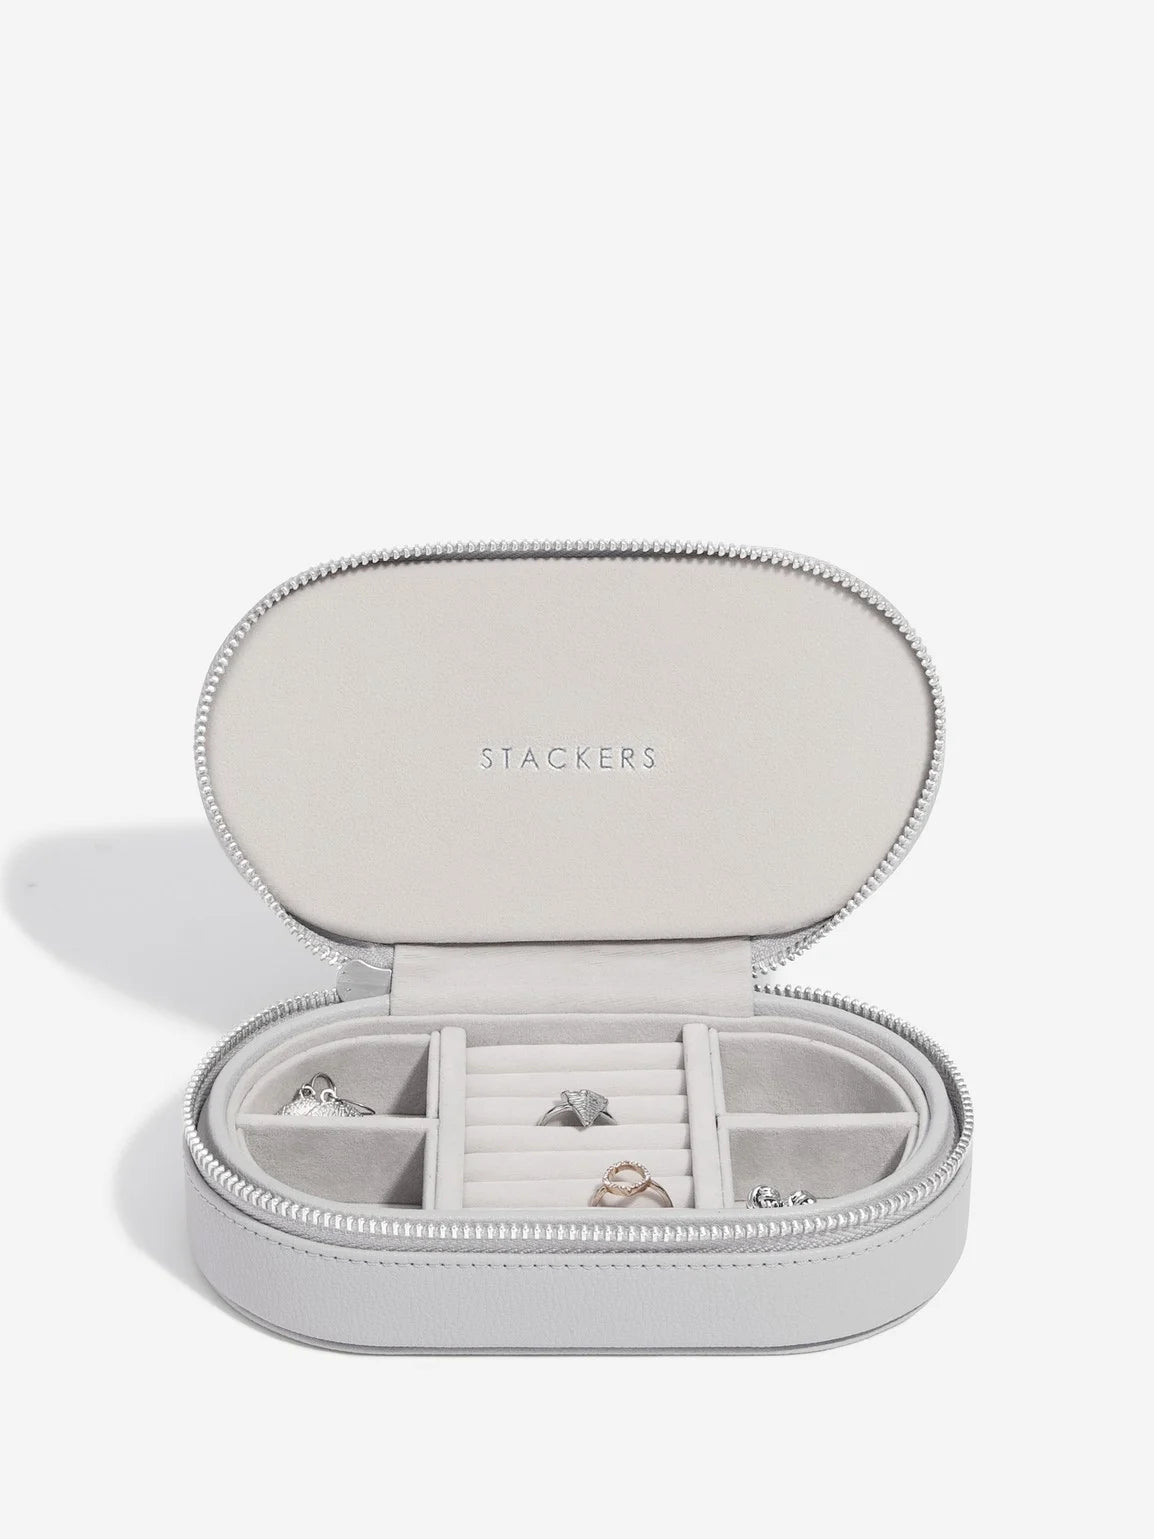 Stackers oval zipped travel jewellery box - Pebble Grey.